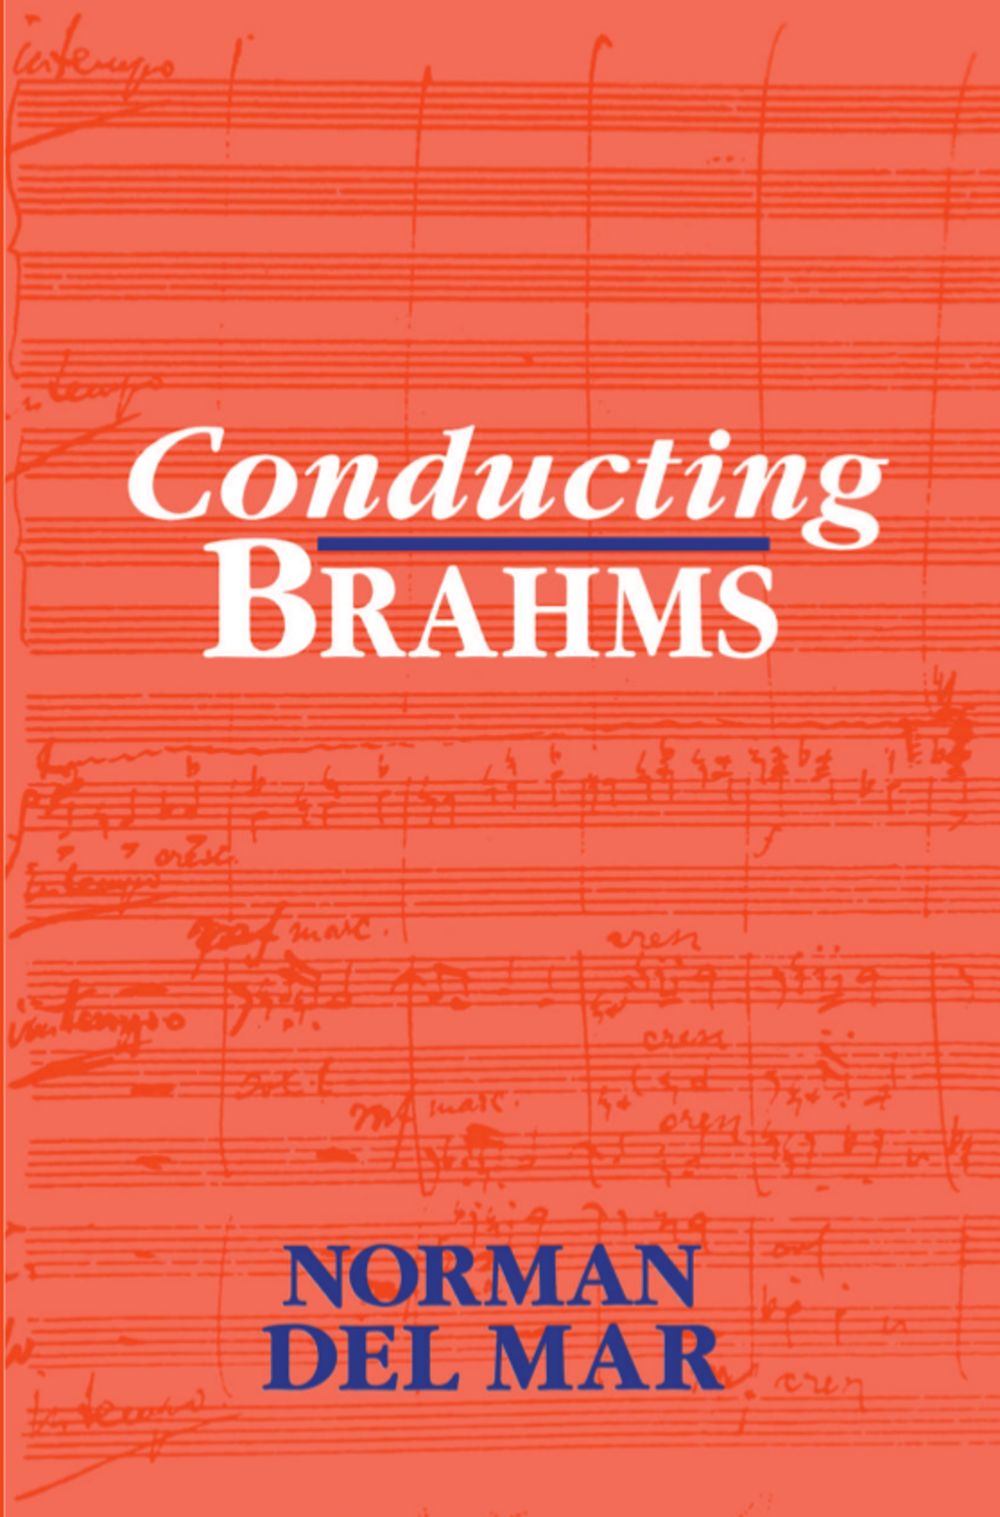 Del Mar Conducting Brahms Sheet Music Songbook